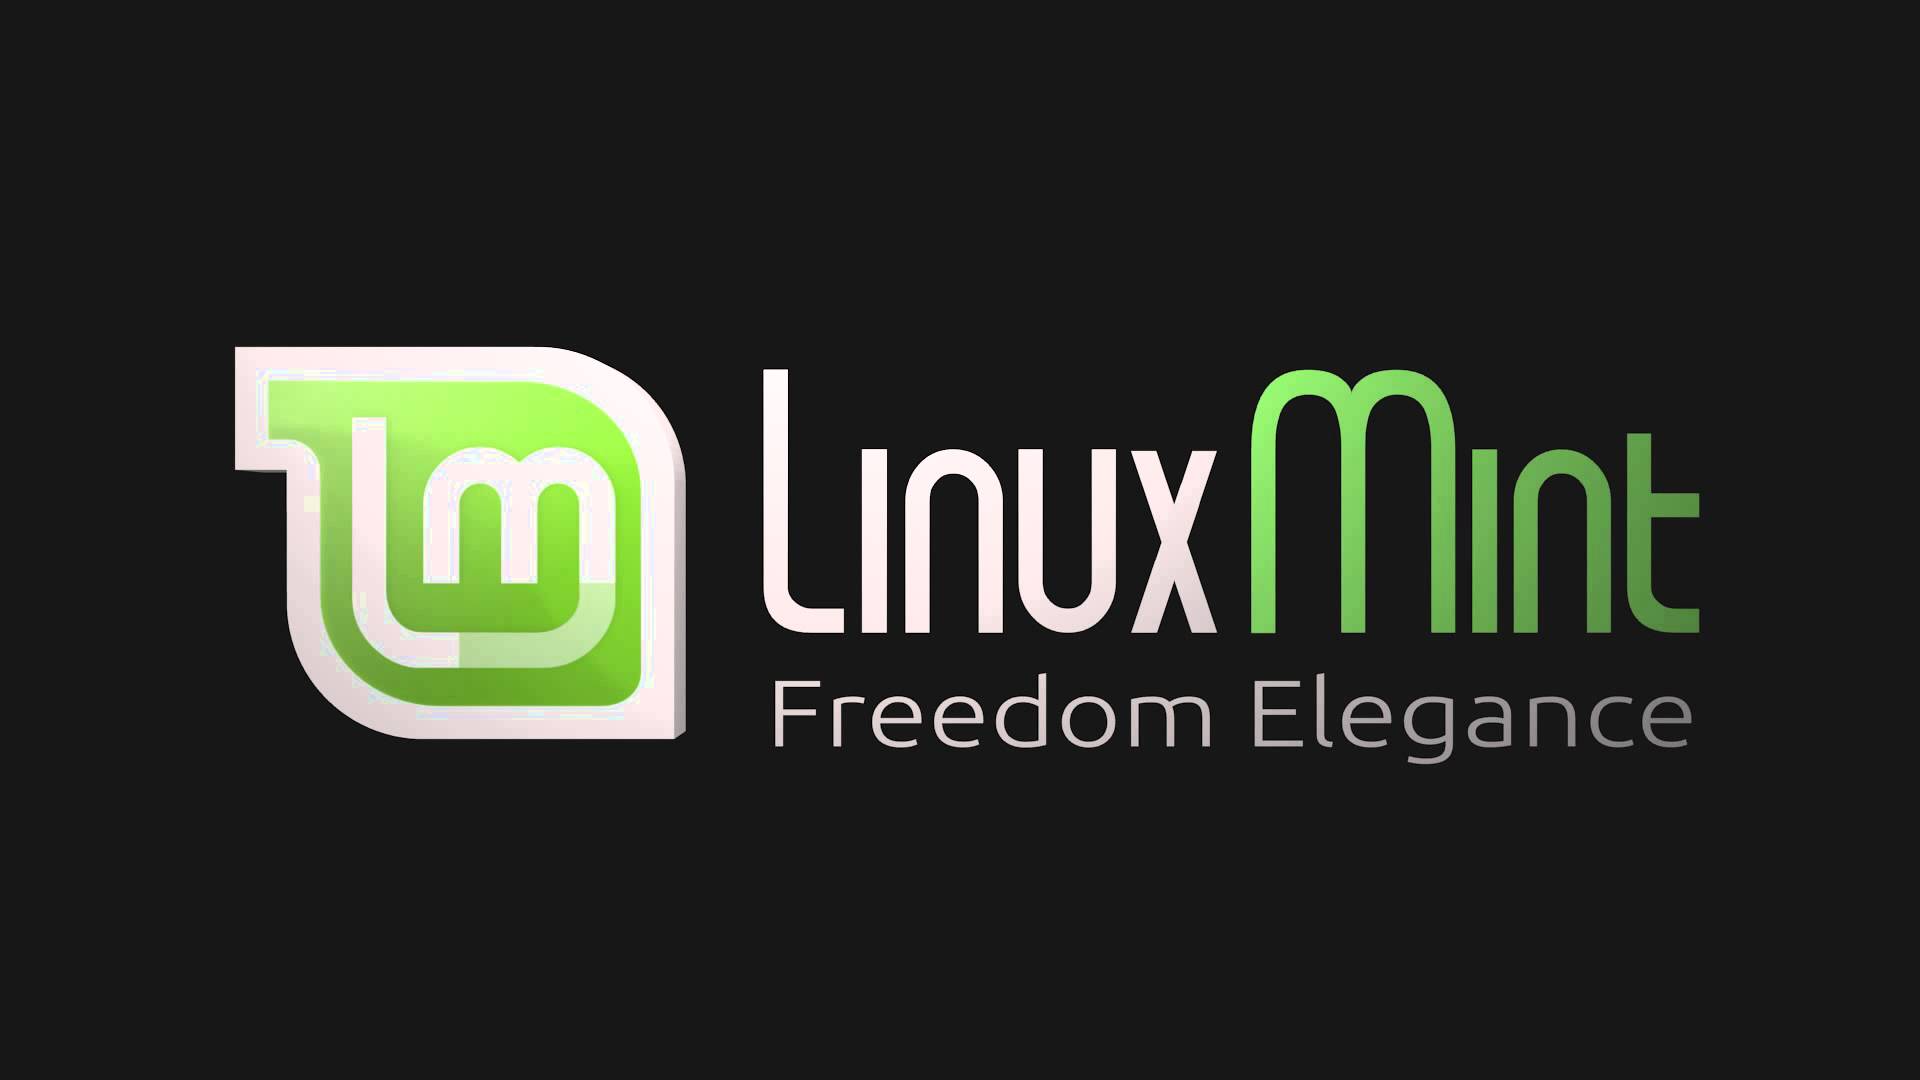 linux-mint-logo